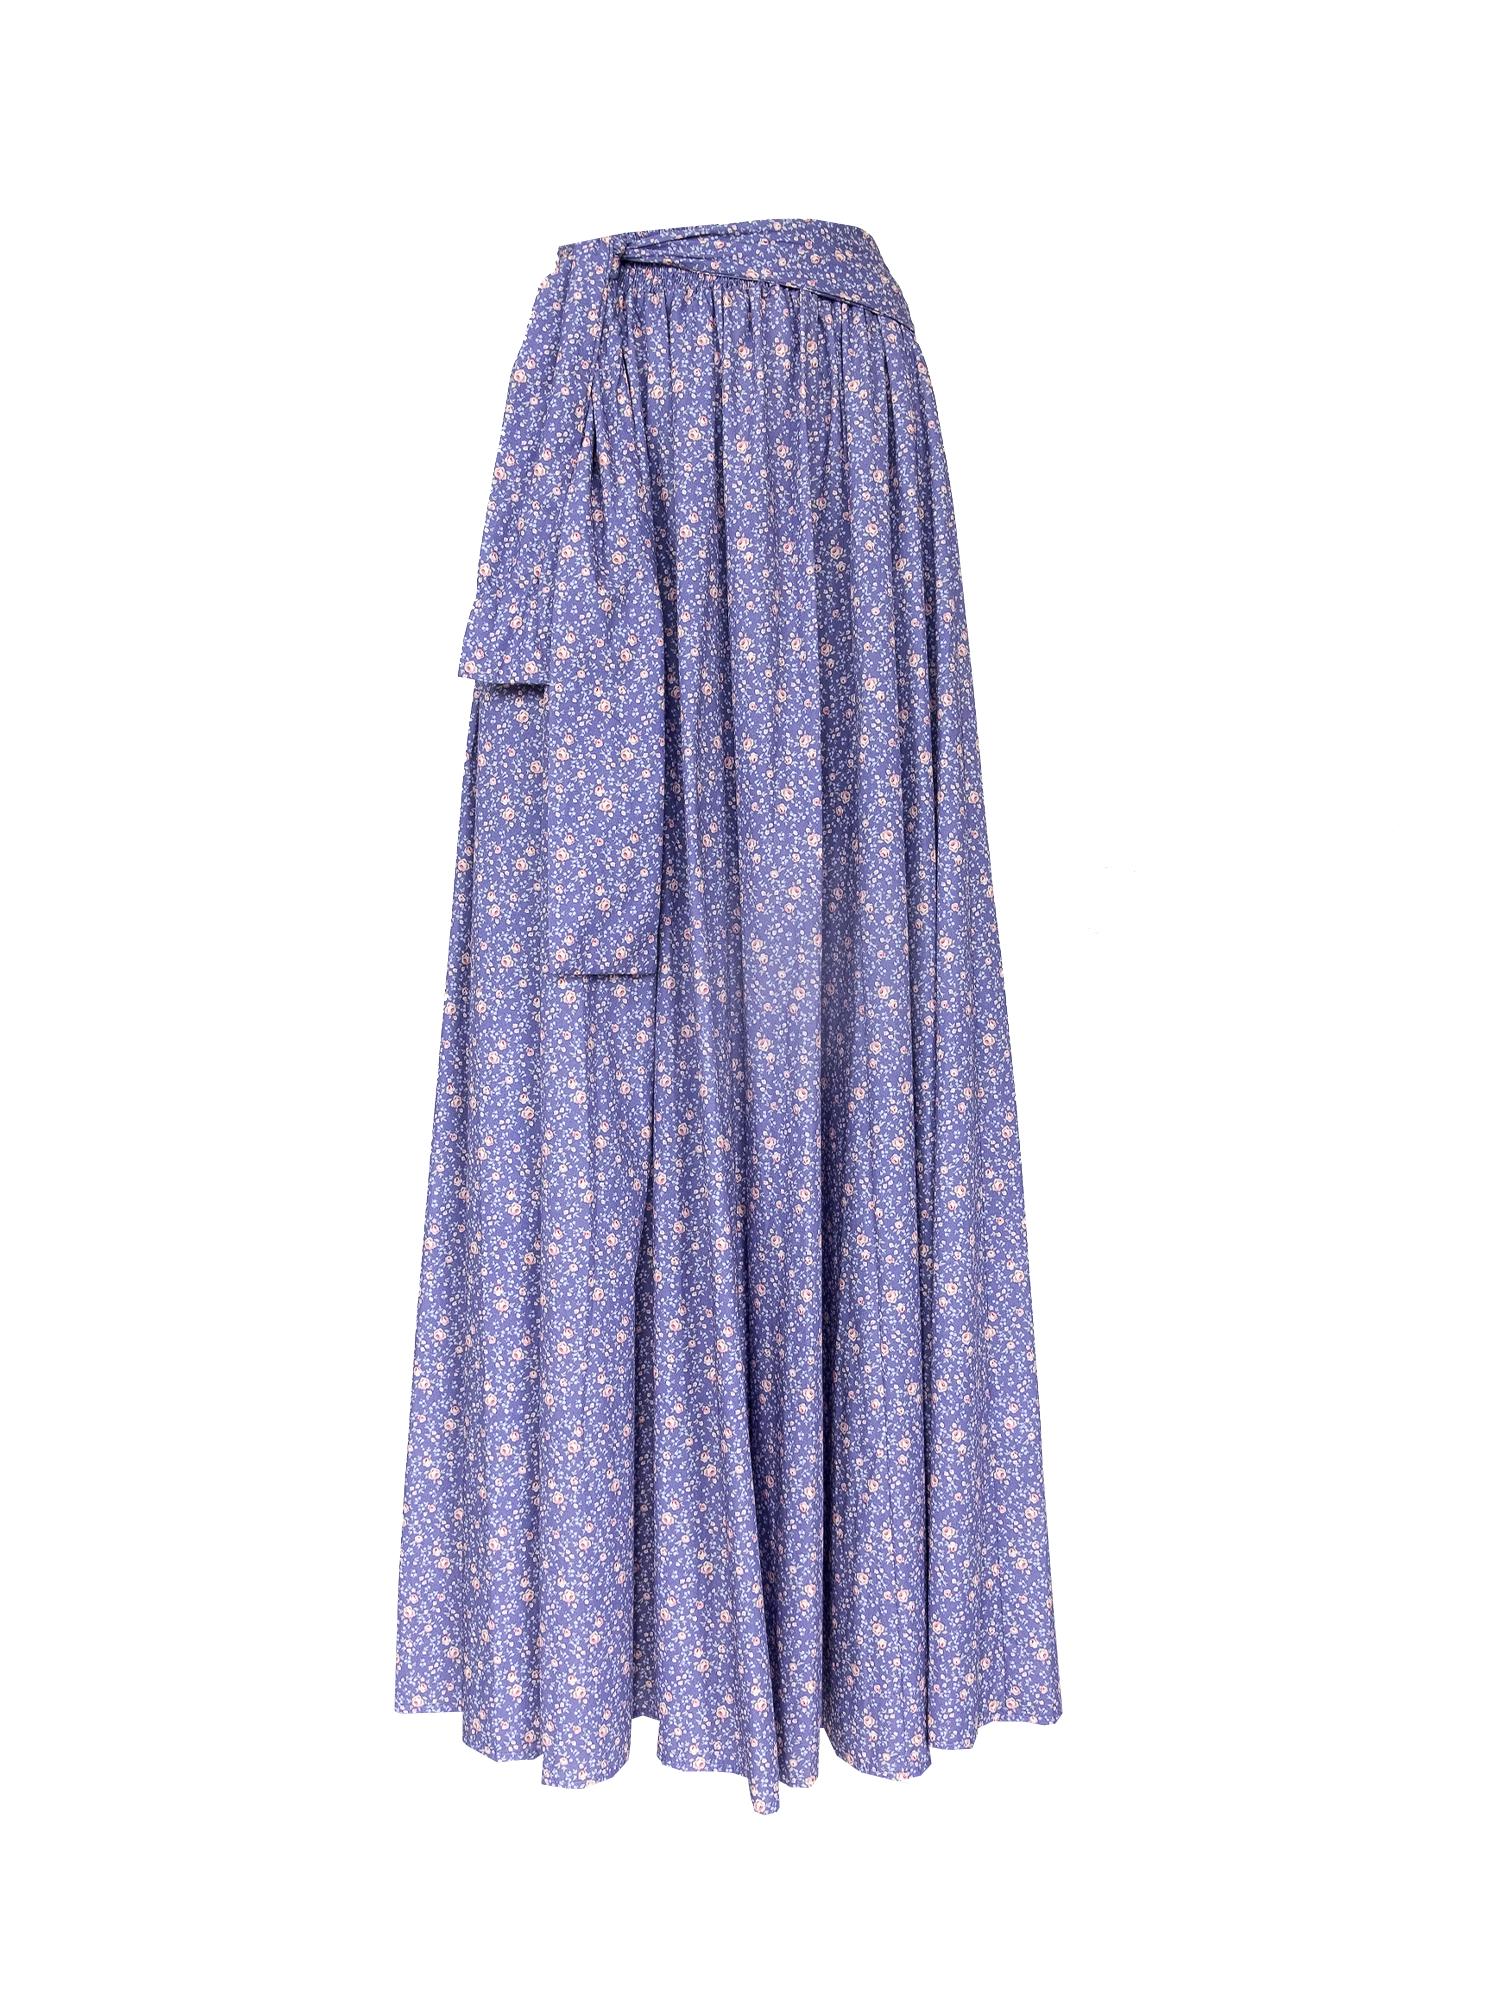 FIORDALISA - long cotton skirt in Versailles pattern